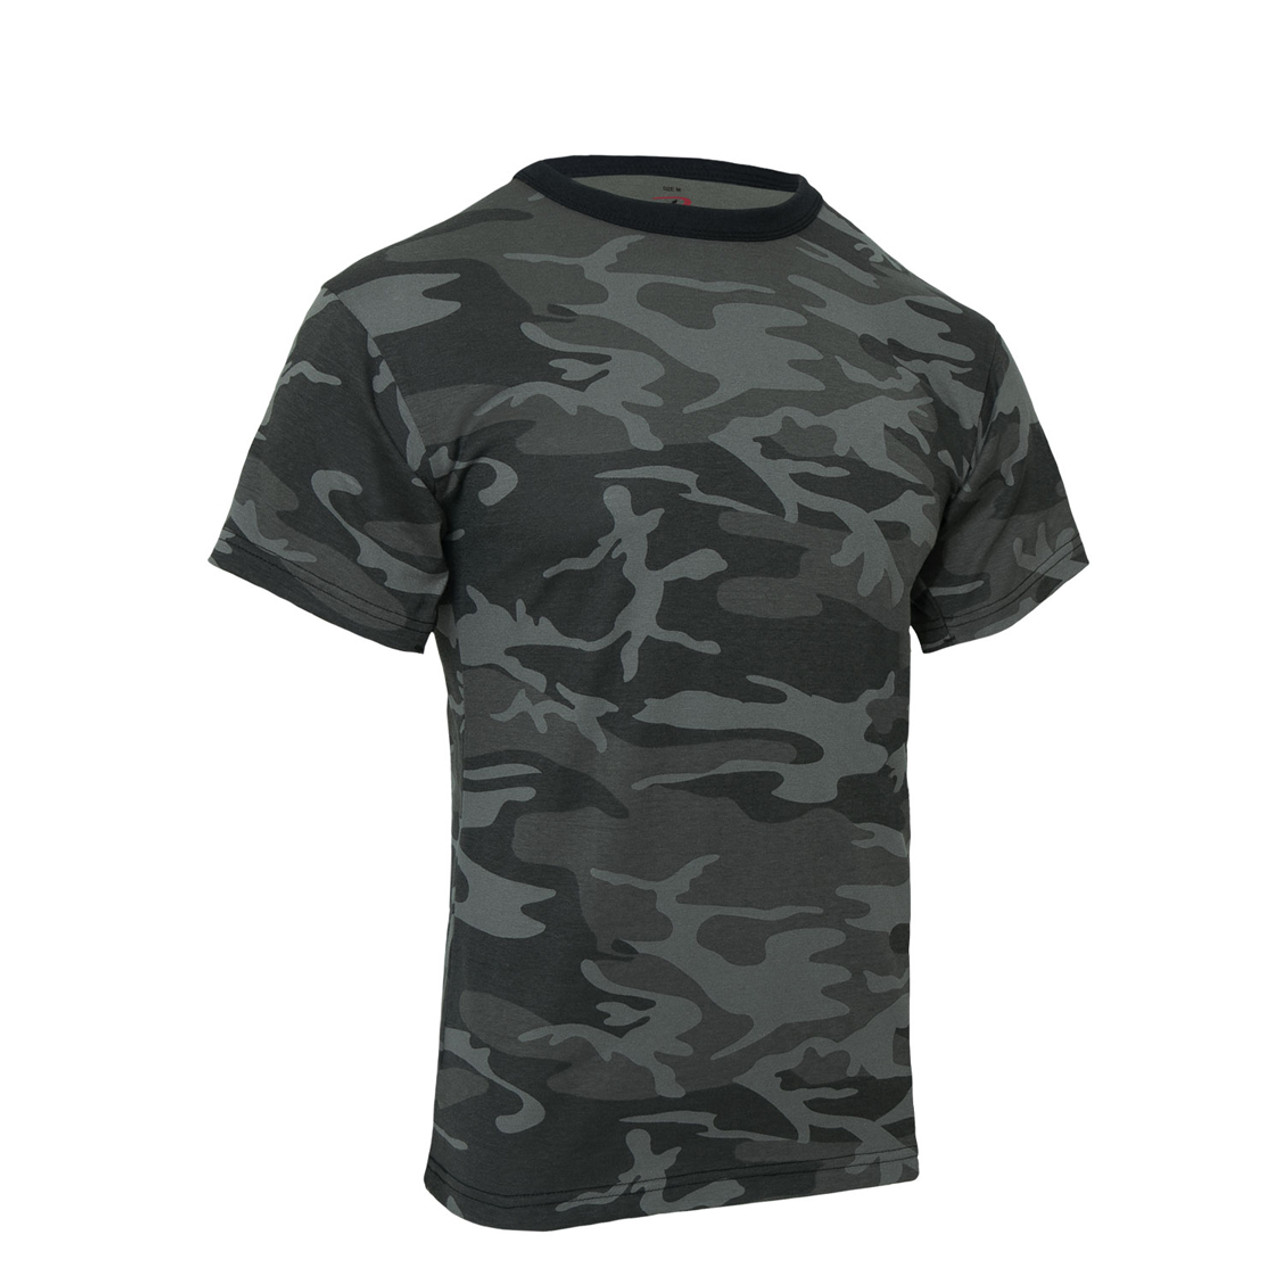 Shop Black Camo T Shirts Gear Army Navy - Fatigues